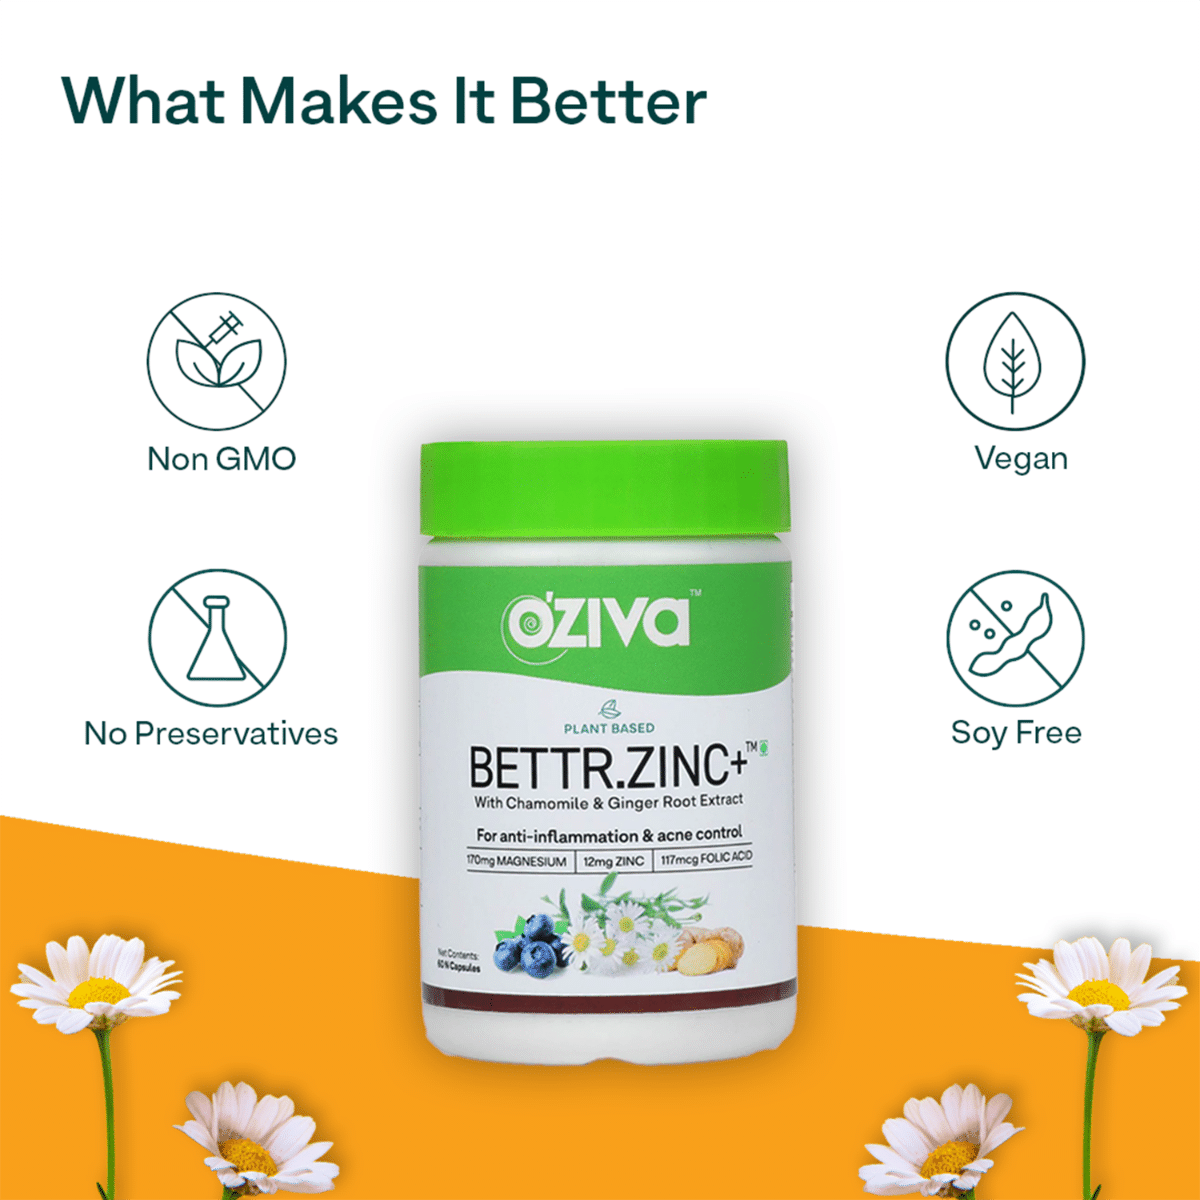 OZiva Plant Based Bettr.Zinc+, 60 Capsules, Pack of 1 